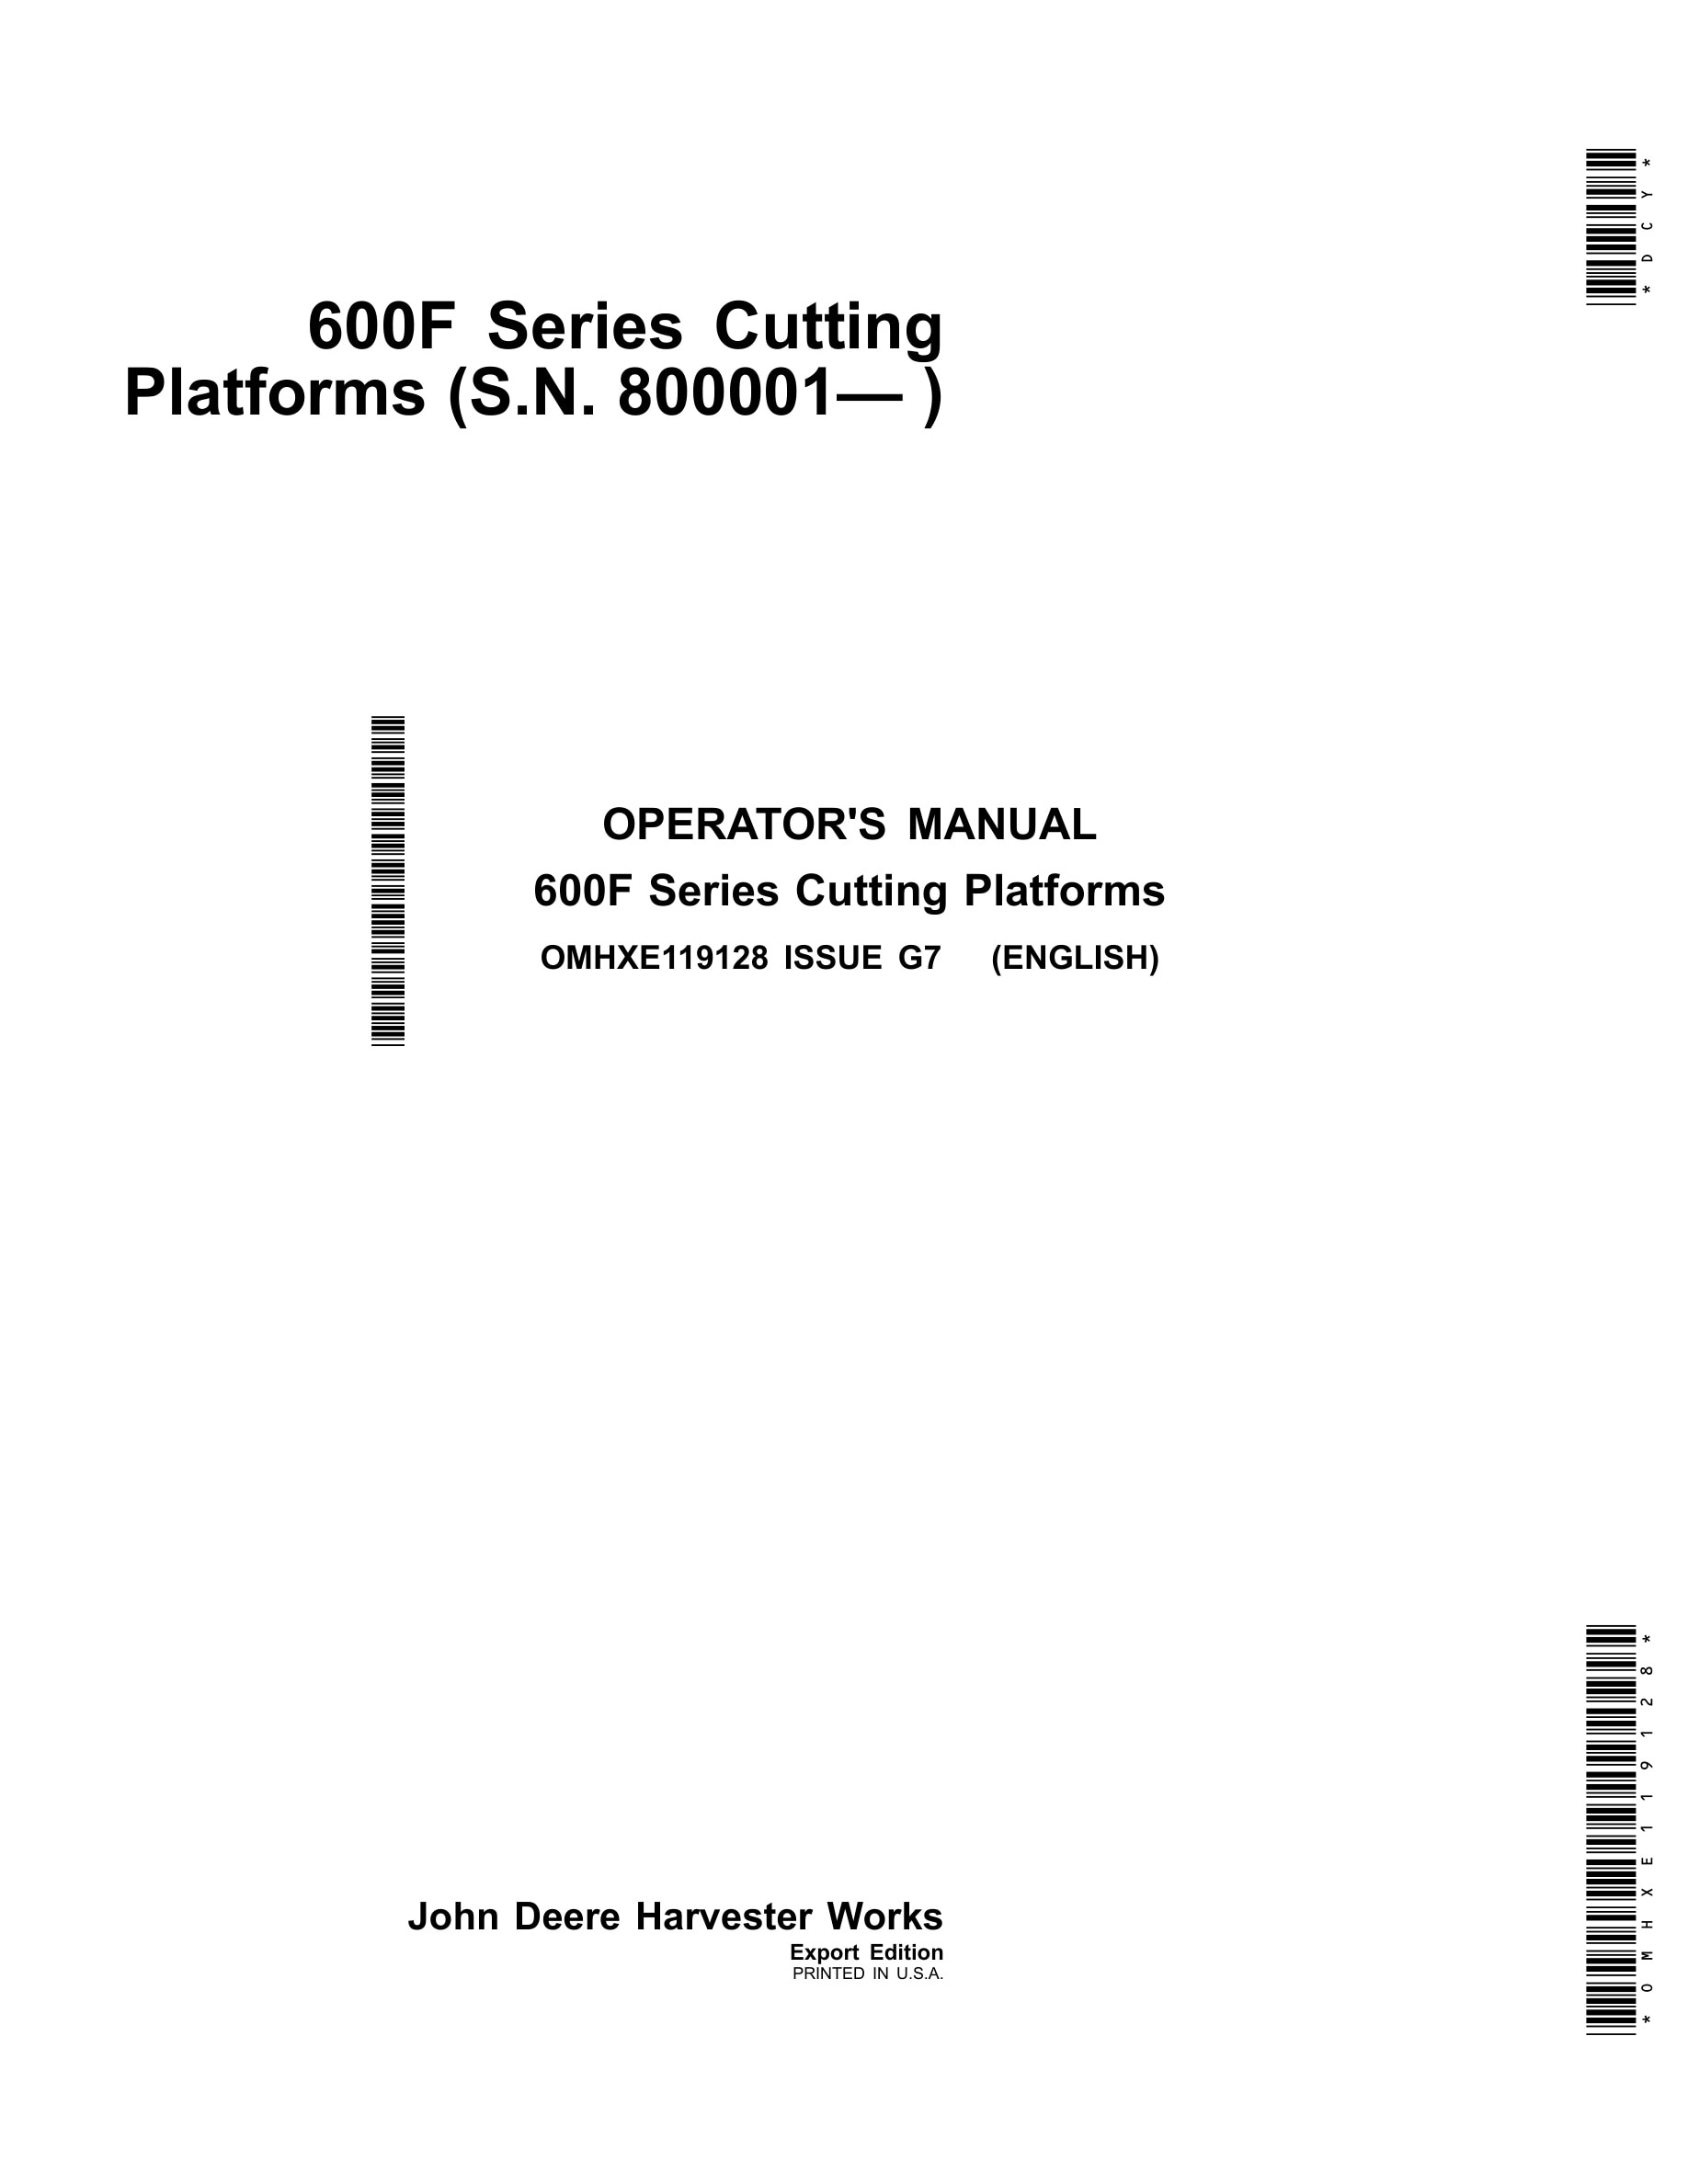 John Deere 600F Series Cutting Platforms Operator Manual OMHXE119128-1